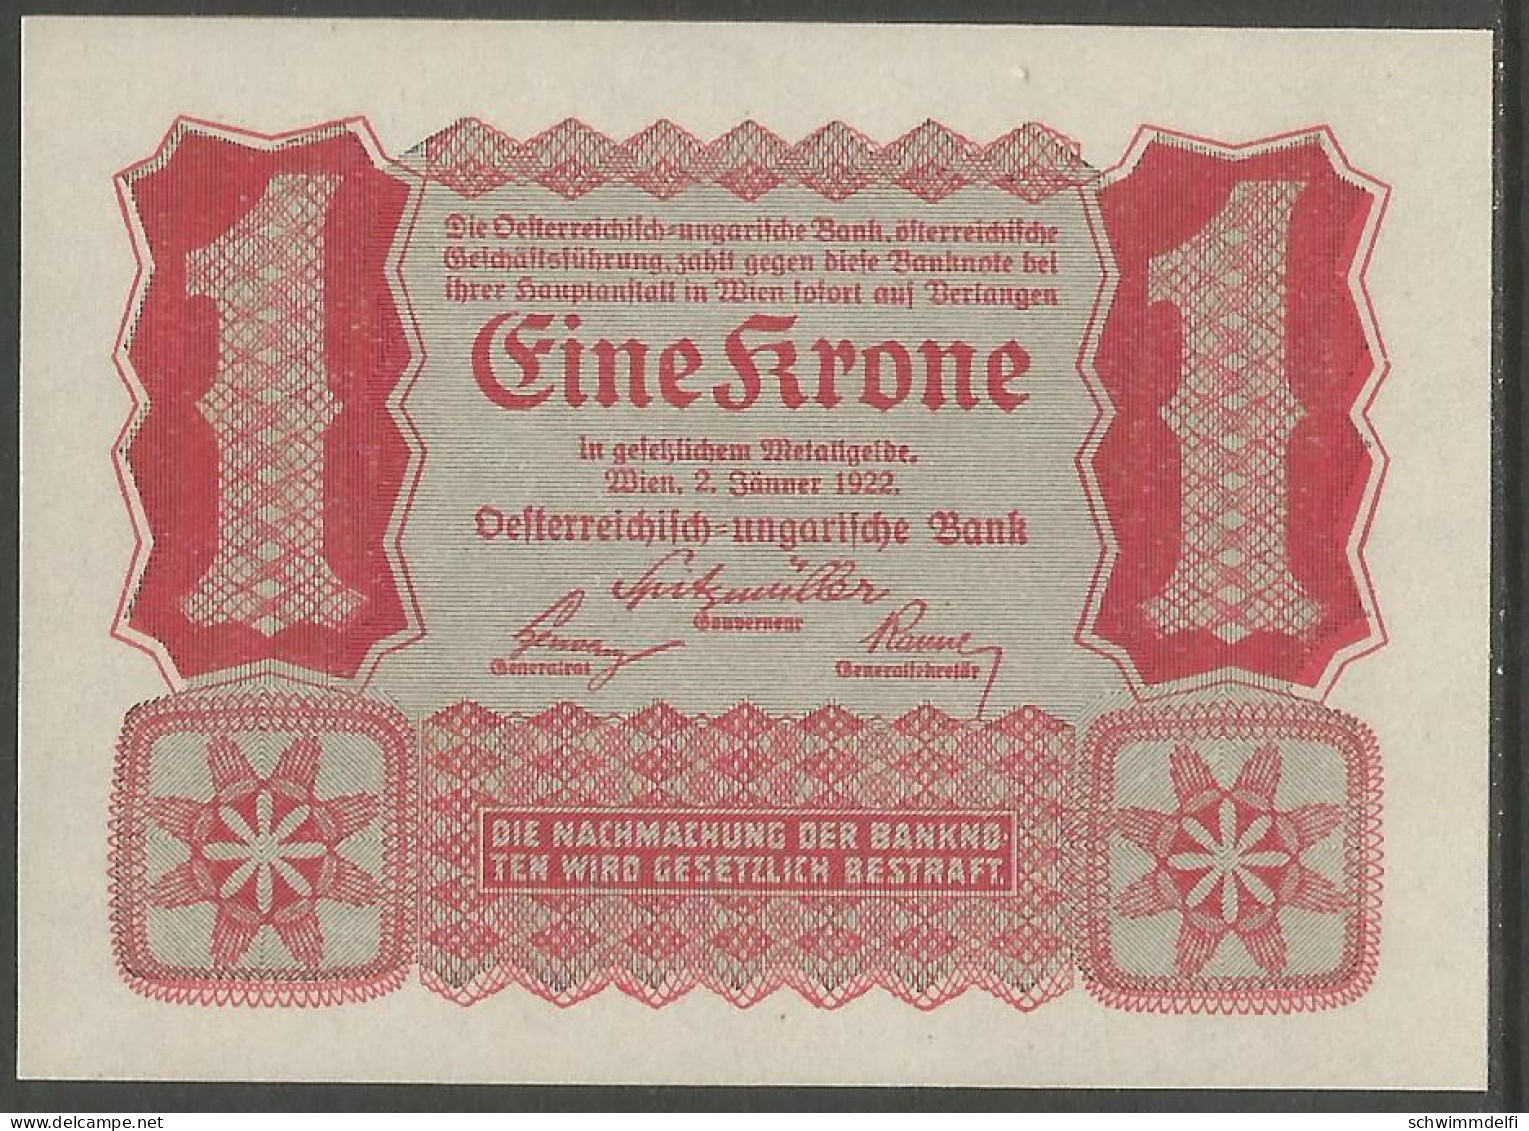 OESTERREICH - AUSTRIA - 1 CORONA 1922 - BILLETE DEL BANCO AUSTRIA - HUNGRÍA - VIENNA , 02. JAENNER 1922 - SIN CIRCULAR - Autriche